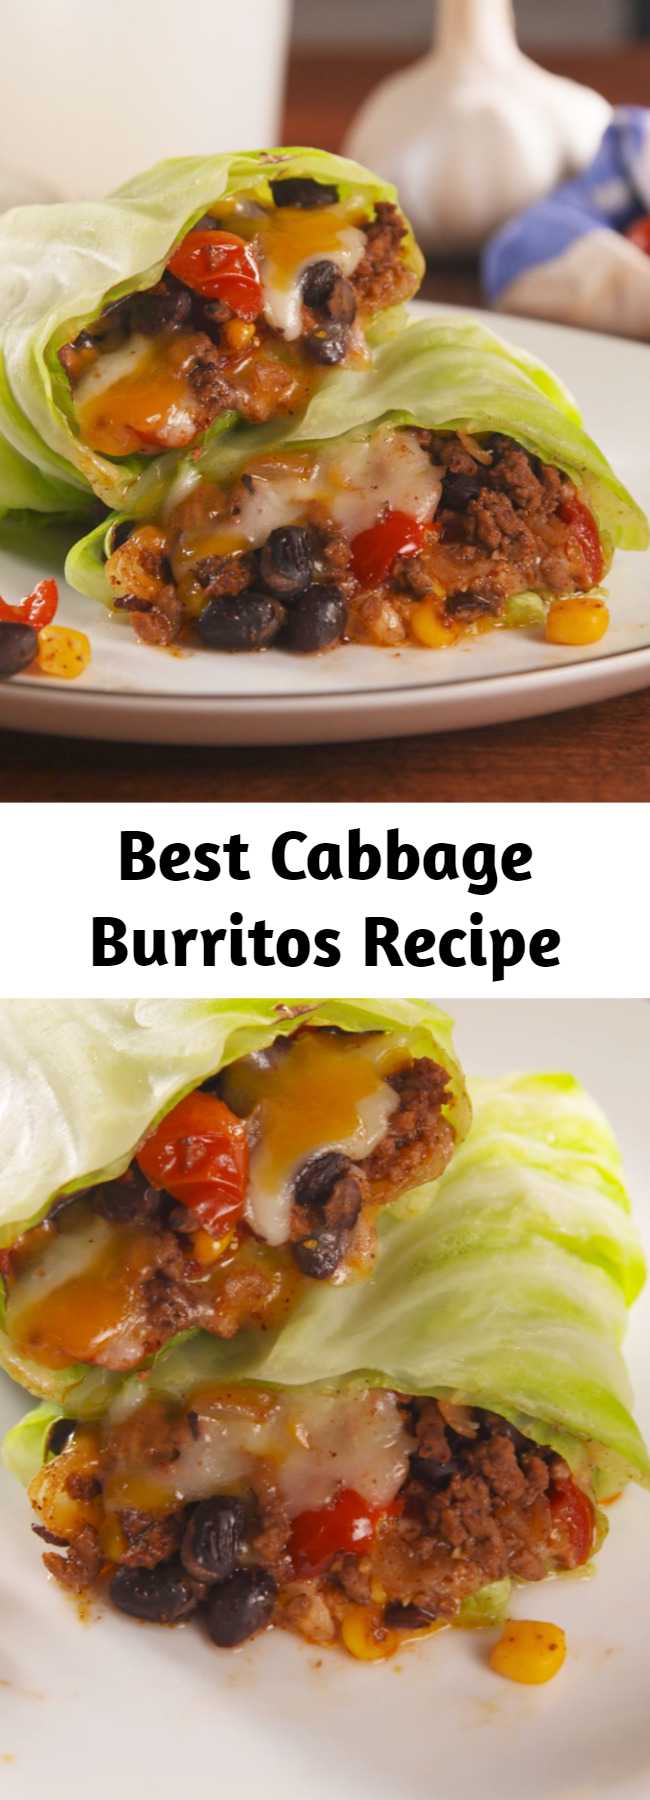 Best Cabbage Burritos Recipe - The healthy way to get your Tex-Mex fix. #healthyrecipes #easyrecipes #cabbage #healthyburritos #lowcarb